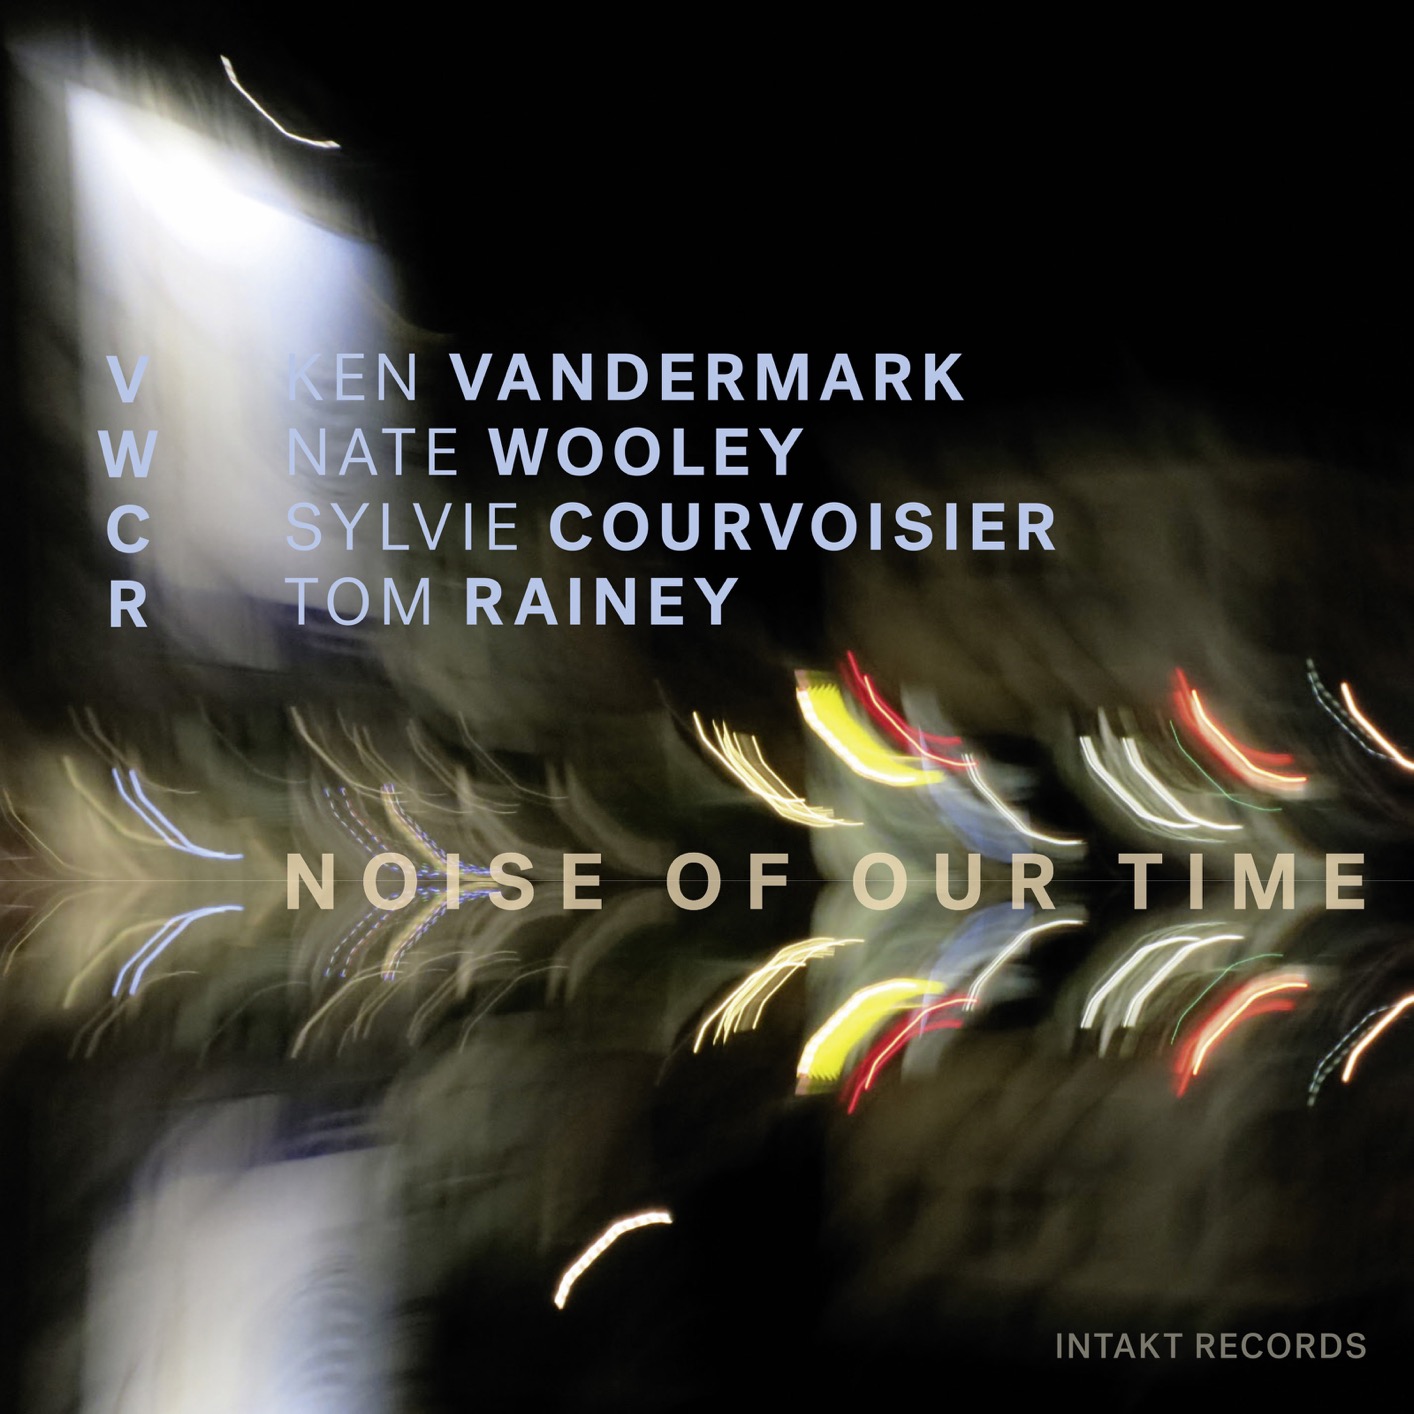 VWCR: Ken Vandermark, Nate Wooley, Sylvie Courvoisier, Tom Rainey – Noise of Our Time (2018) [Official Digital Download 24bit/96kHz]